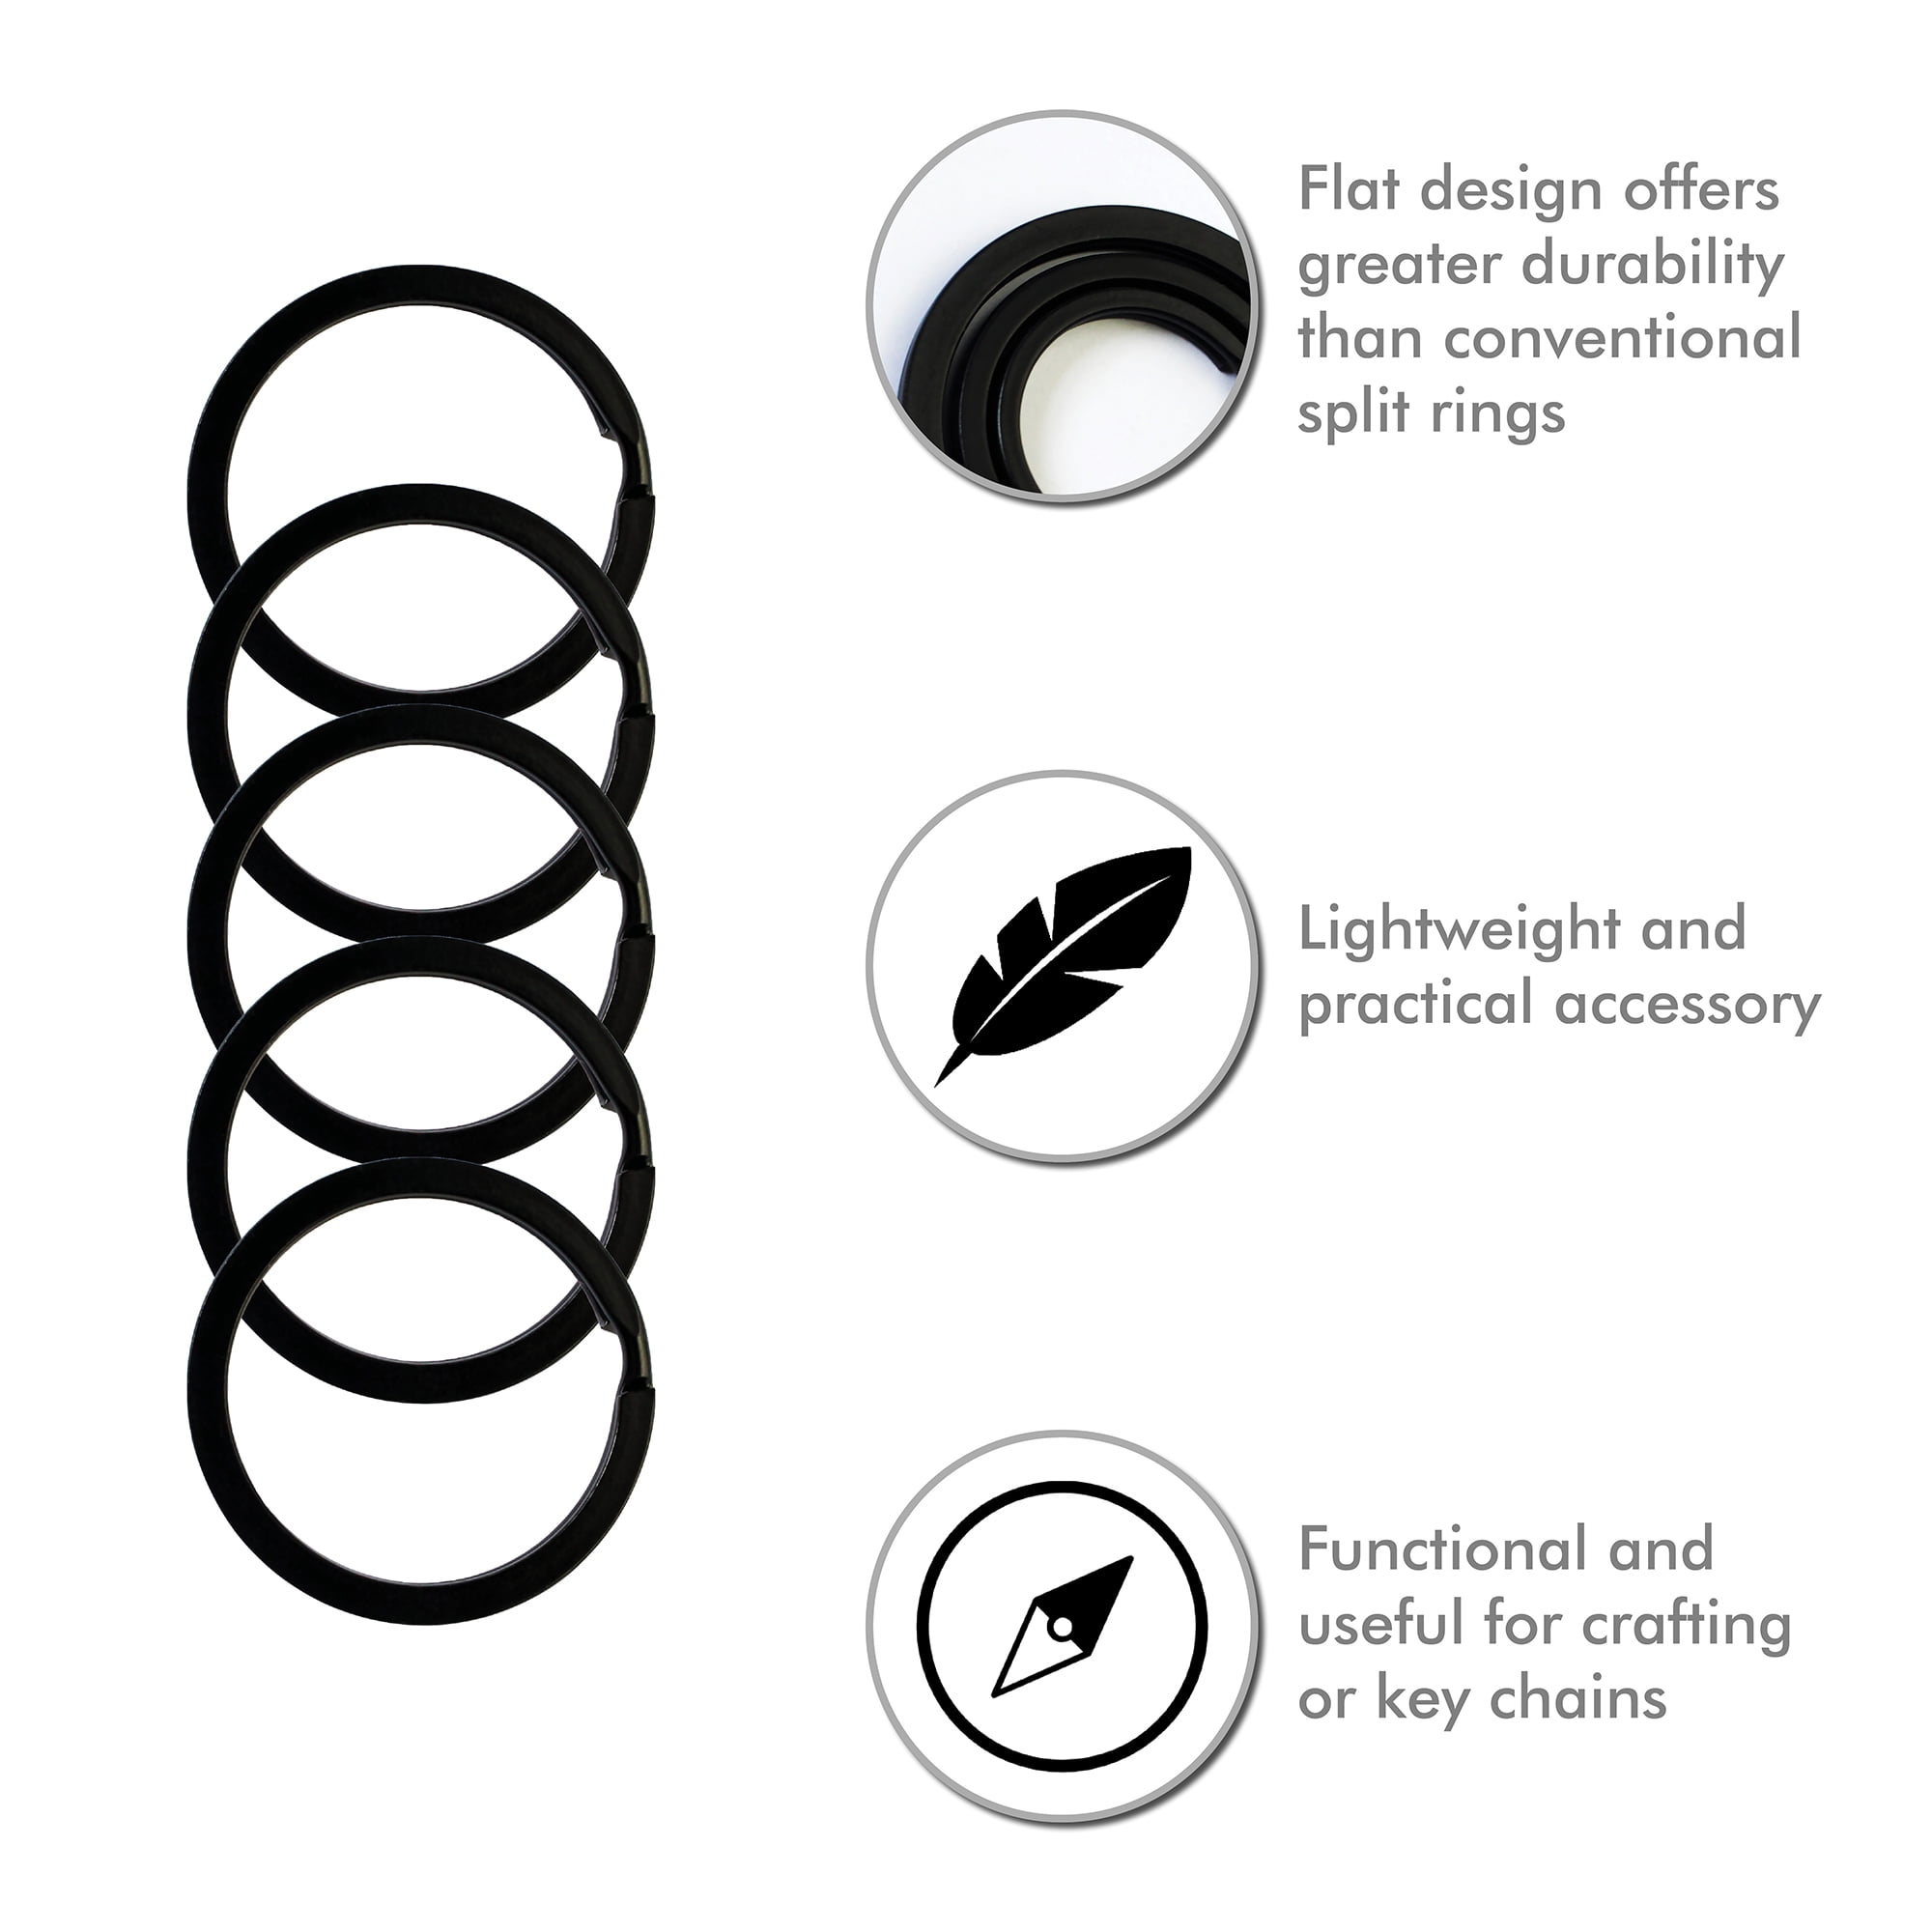 Key Rings Key Chain Metal Split Ring Bulk (Round Edged 1 Inch Diameter)  100pcs, for Home Car Keys Organization, Arts & Crafts, Lanyards, Lead Free